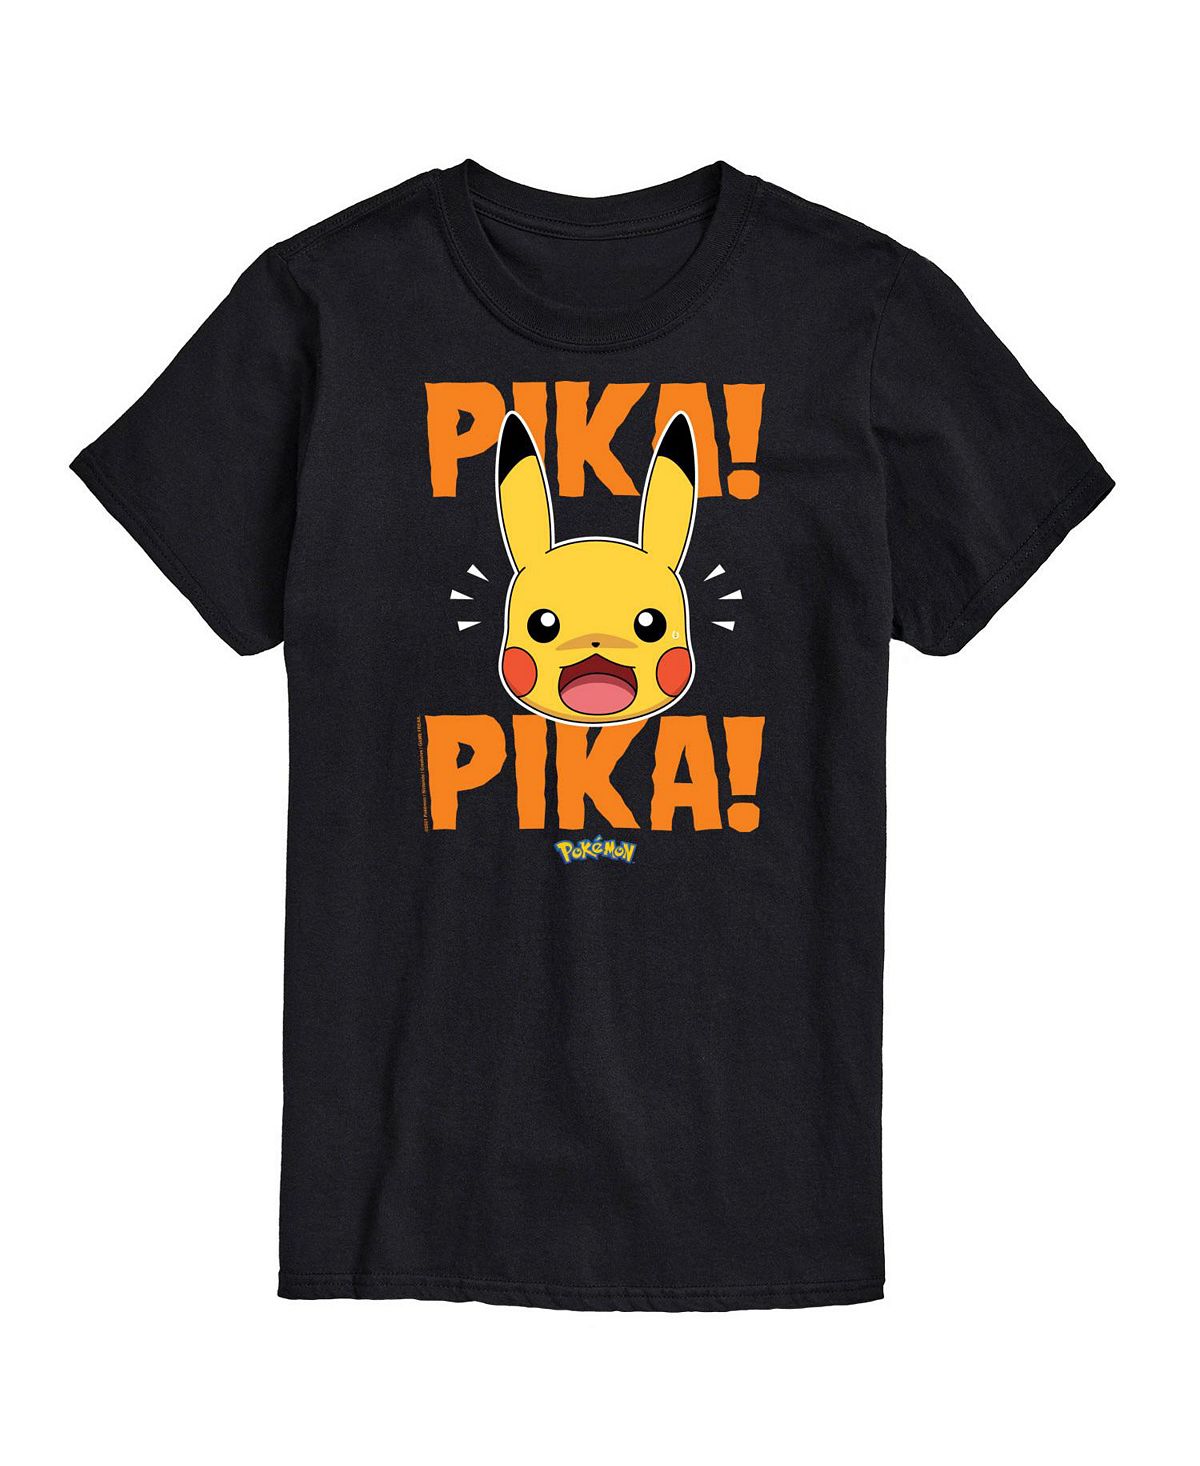 Мужская футболка с короткими рукавами pokemon pika pika AIRWAVES, черный мужская футболка с длинным рукавом pokemon pika pika pika airwaves черный